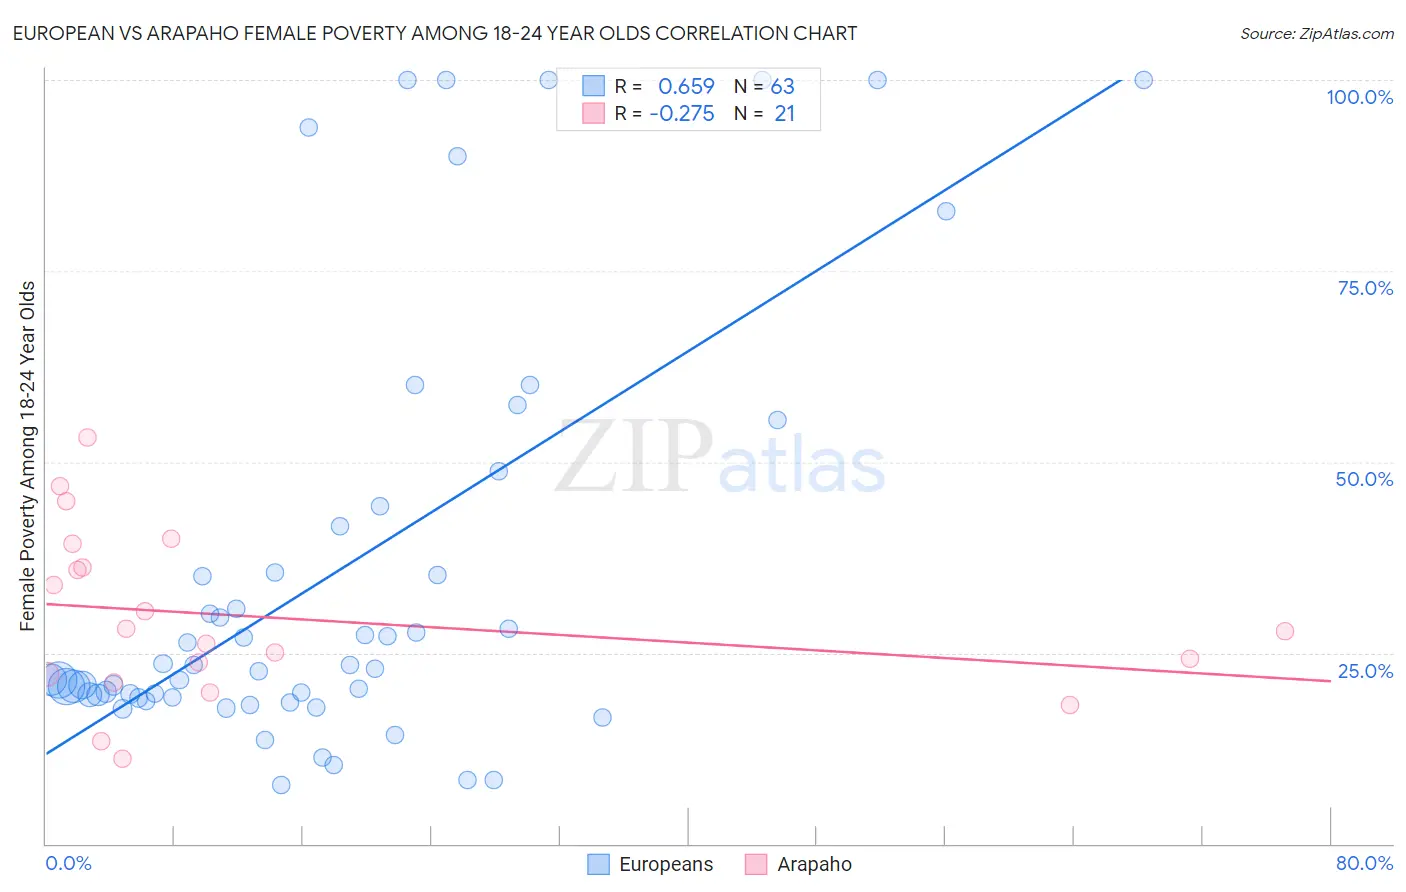 European vs Arapaho Female Poverty Among 18-24 Year Olds